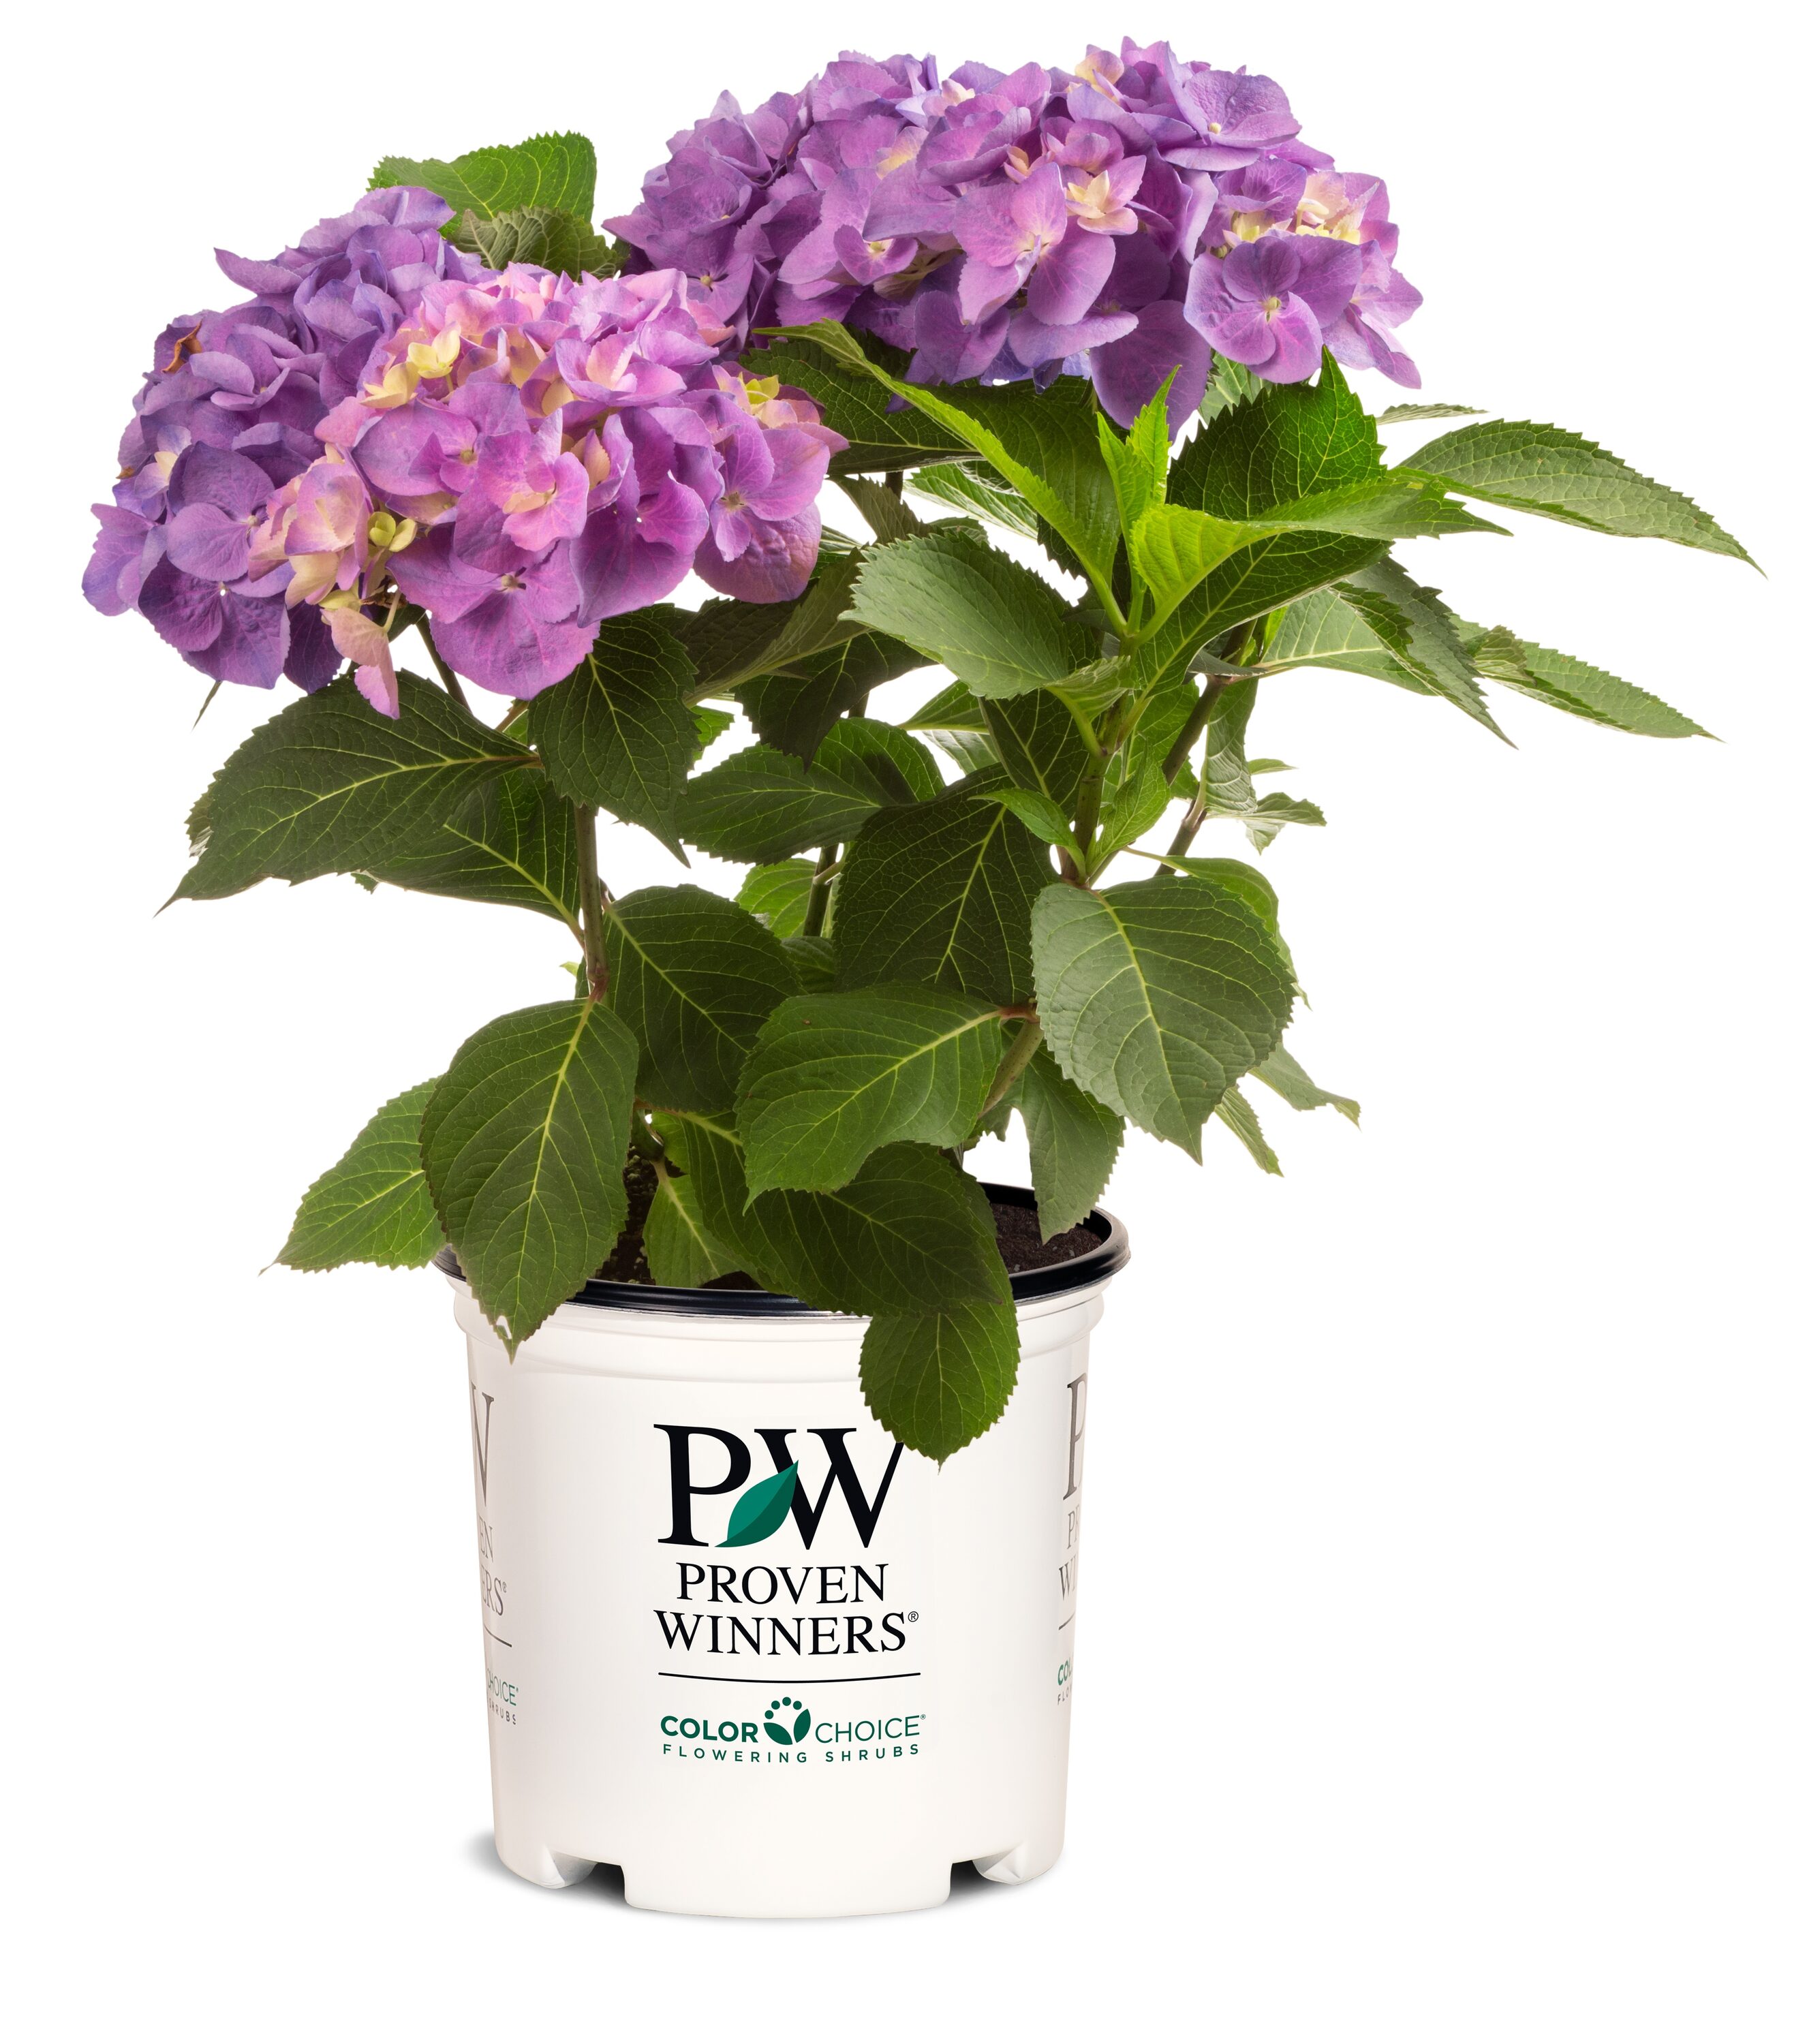 Proven Winners Multicolor Flowering Shrub in 1-Quart Pot in the 